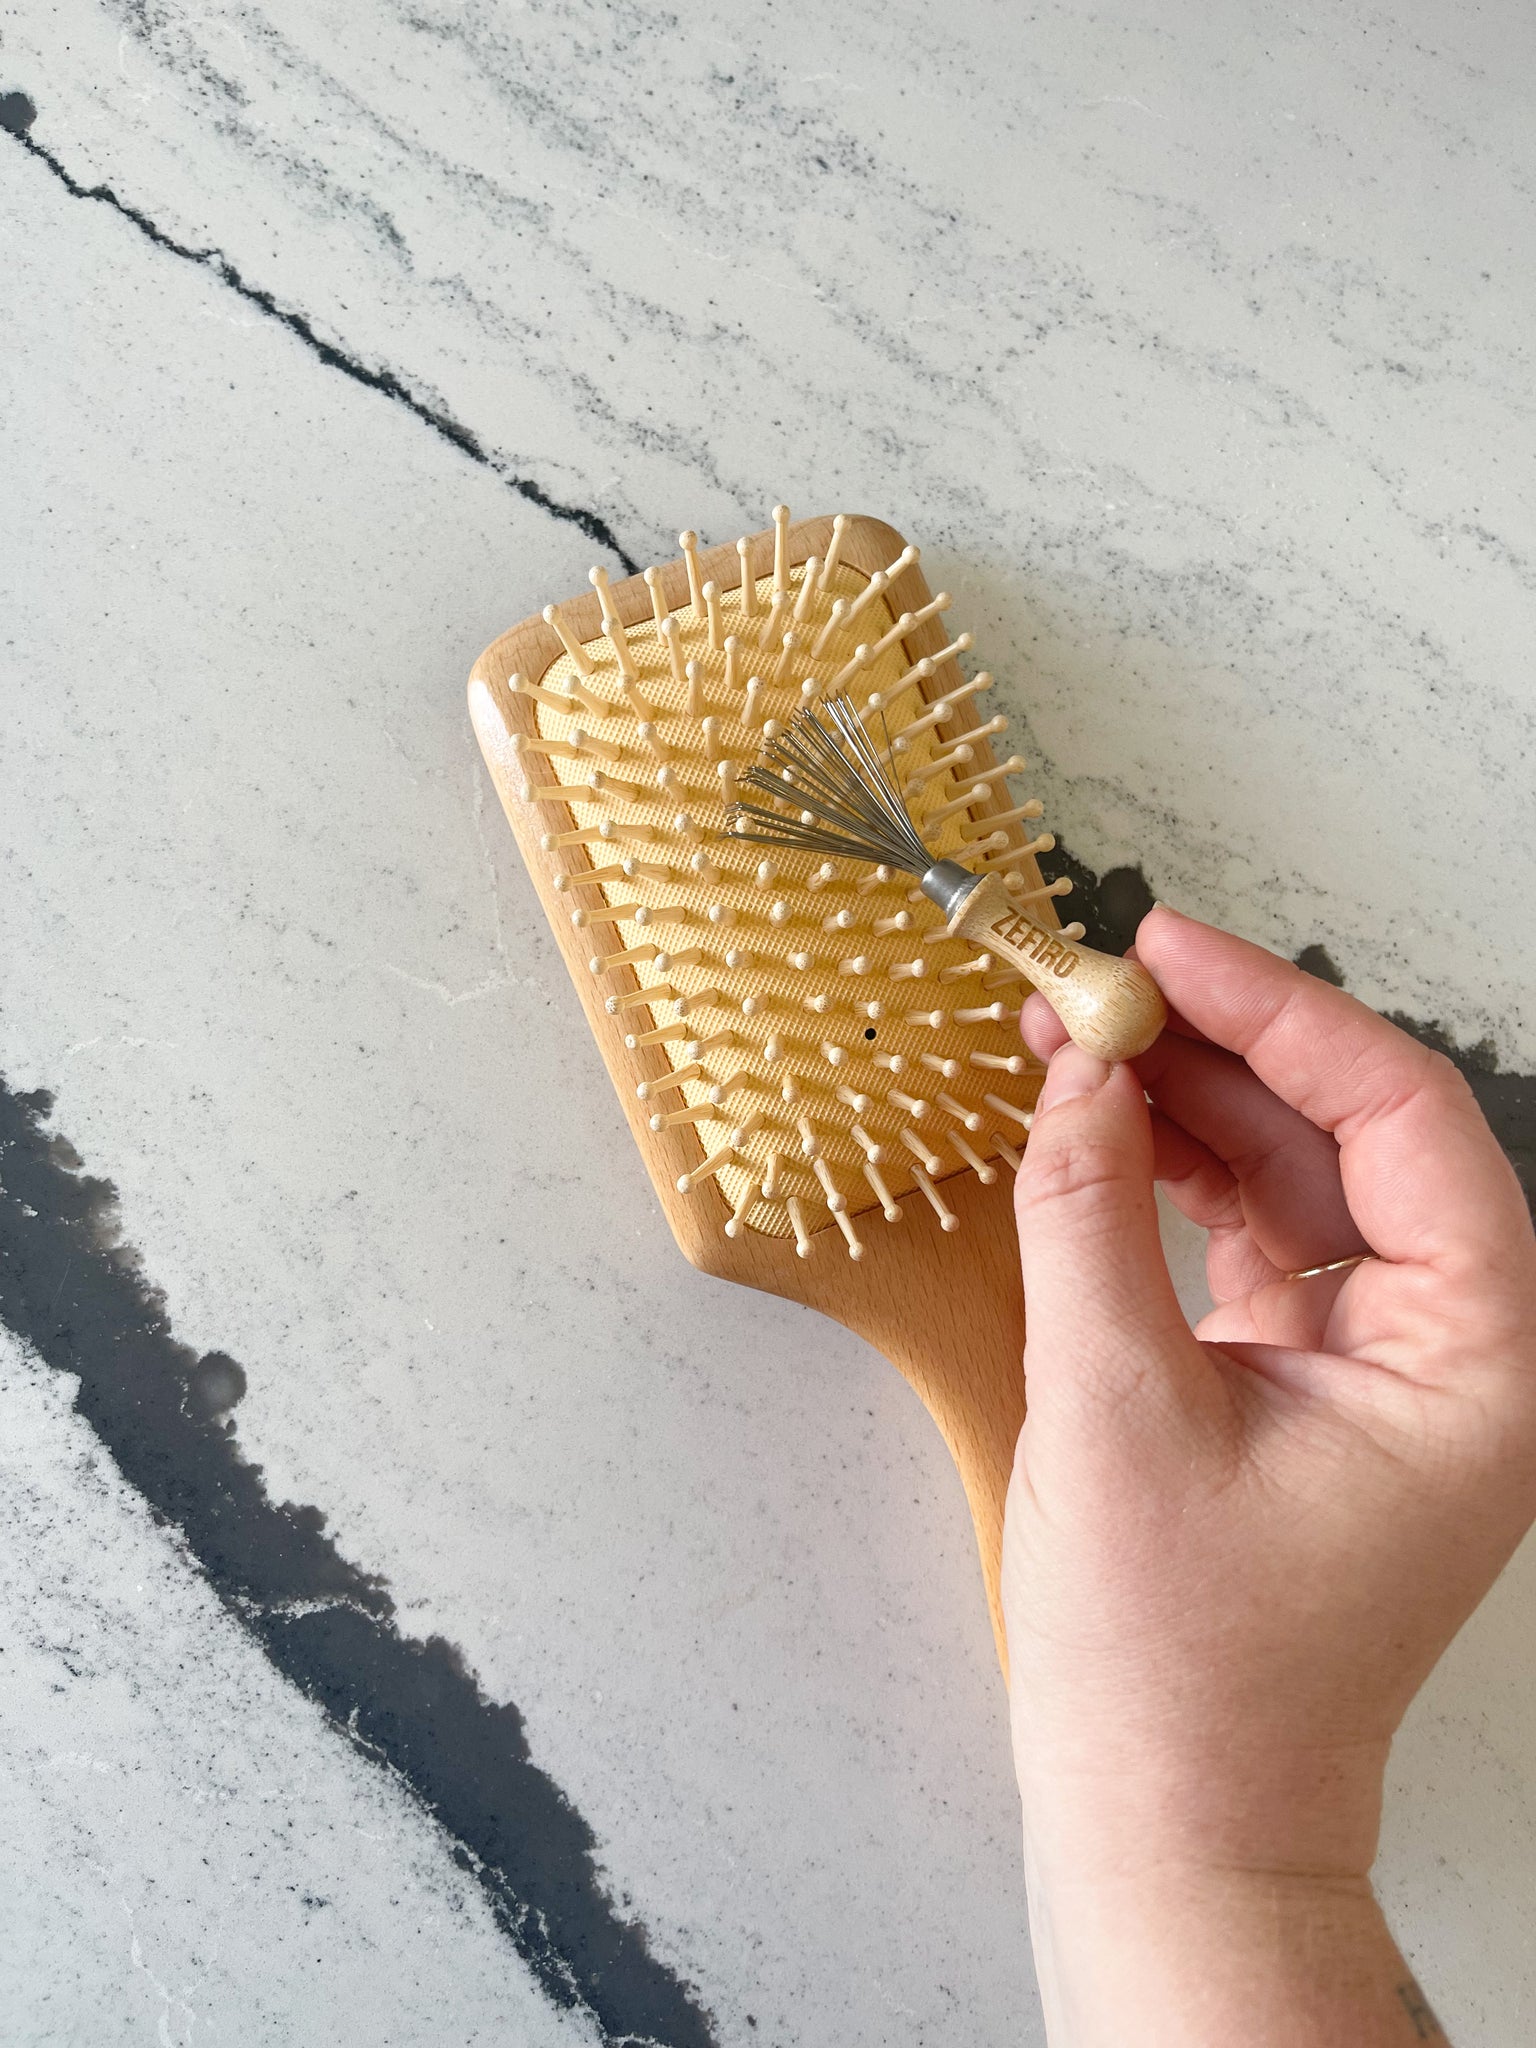 Hair Brush Cleaning Tool [Zefiro] – Indigo River & Co.